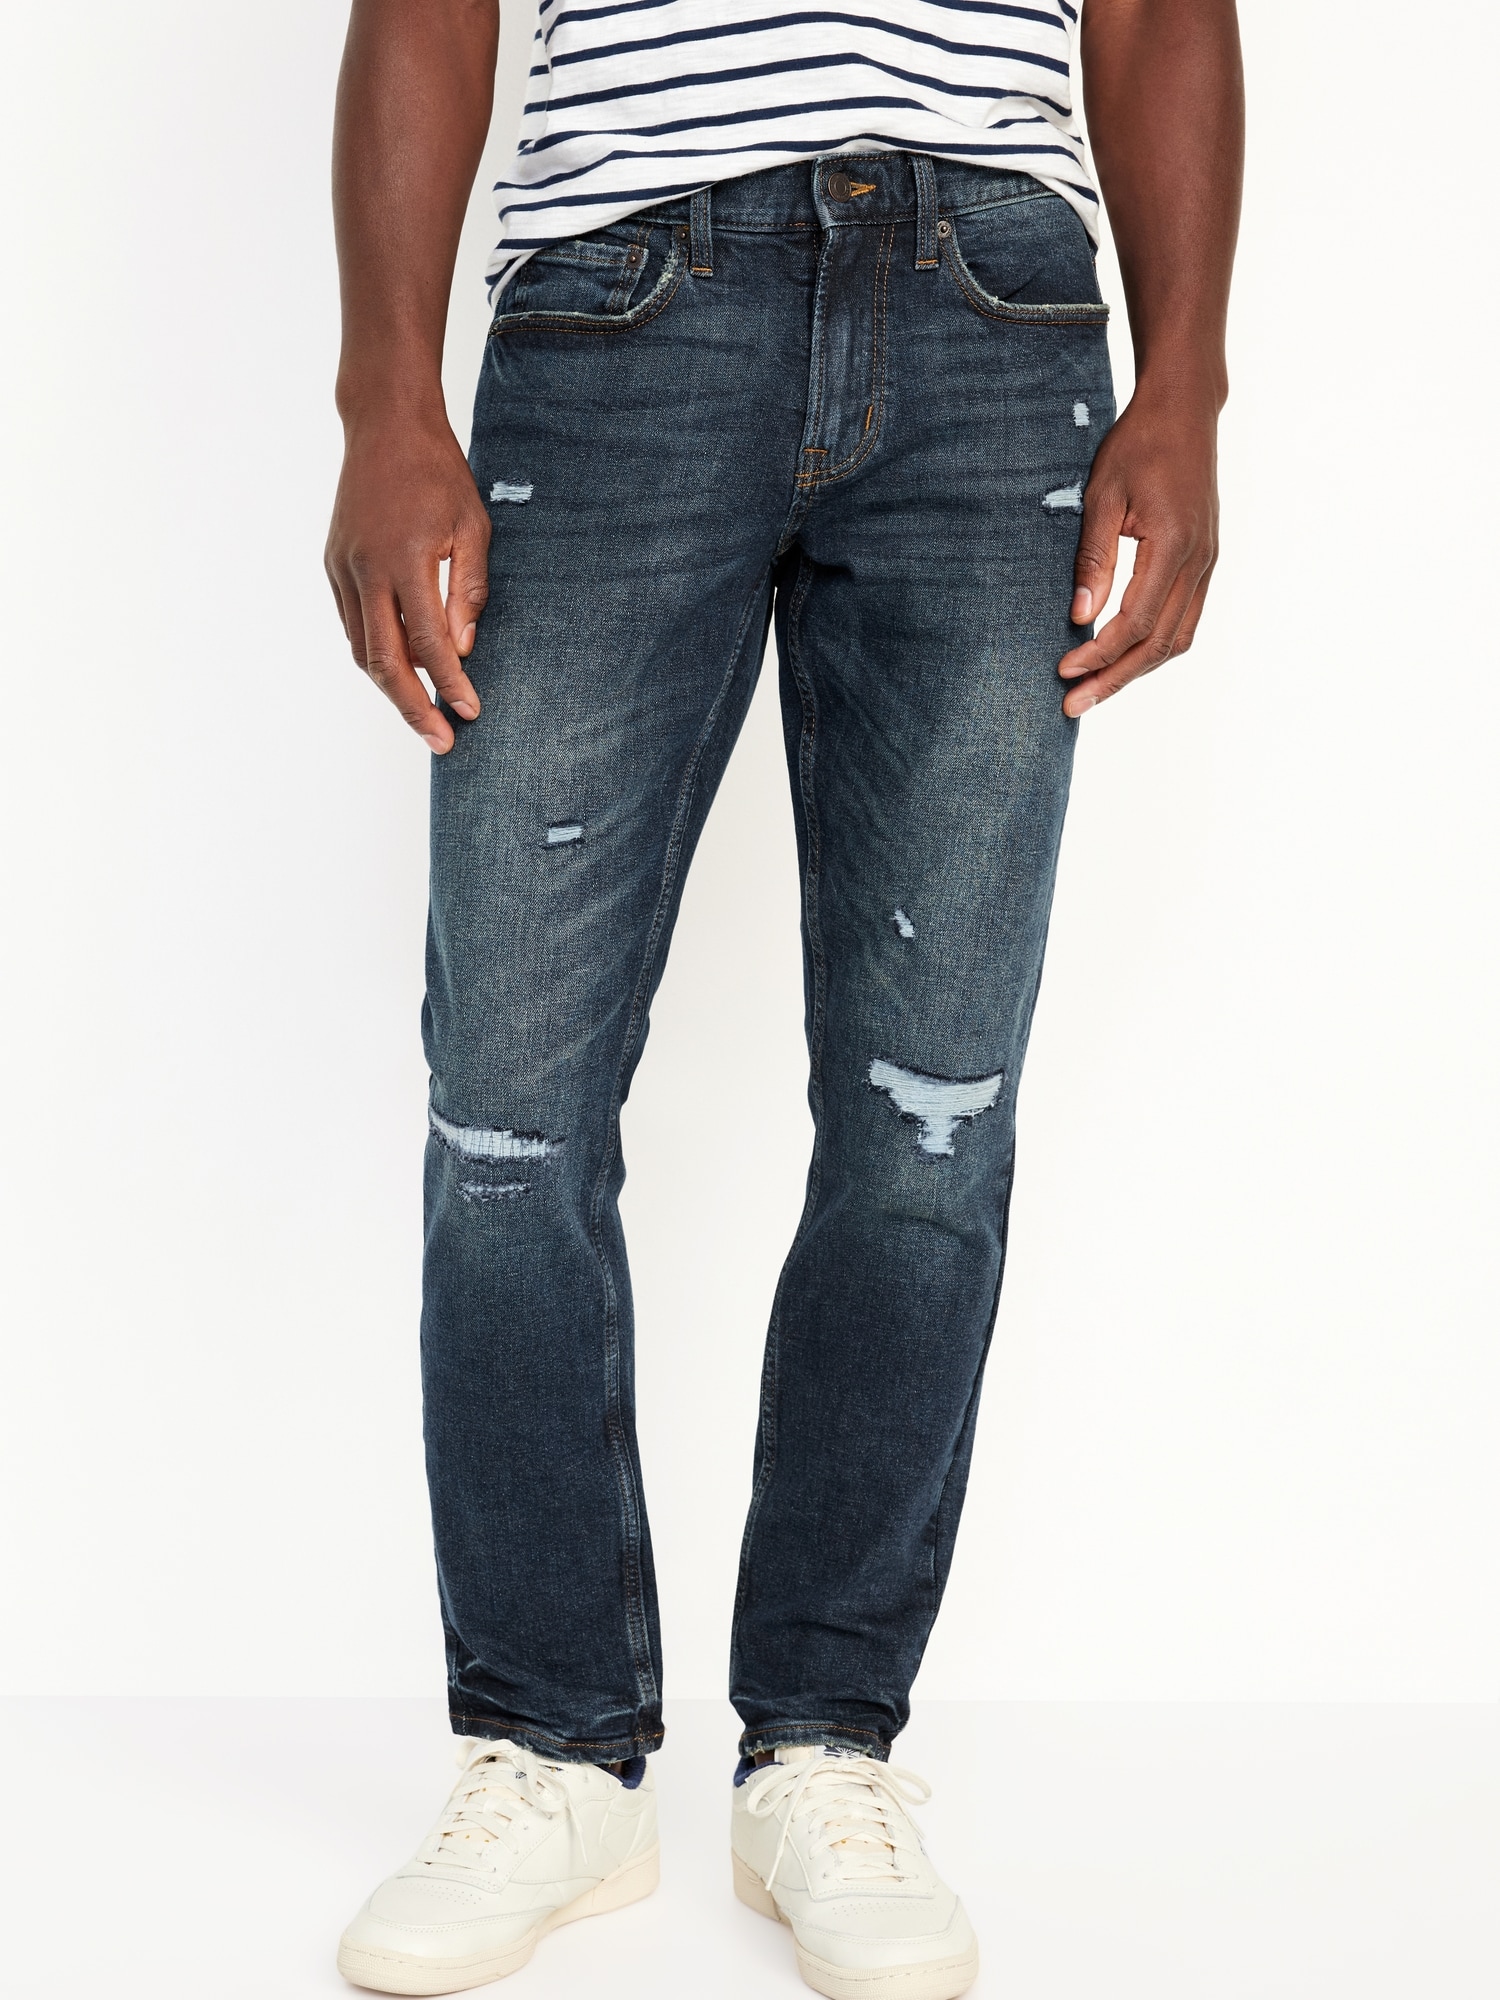 Slim Built-In-Flex Jeans